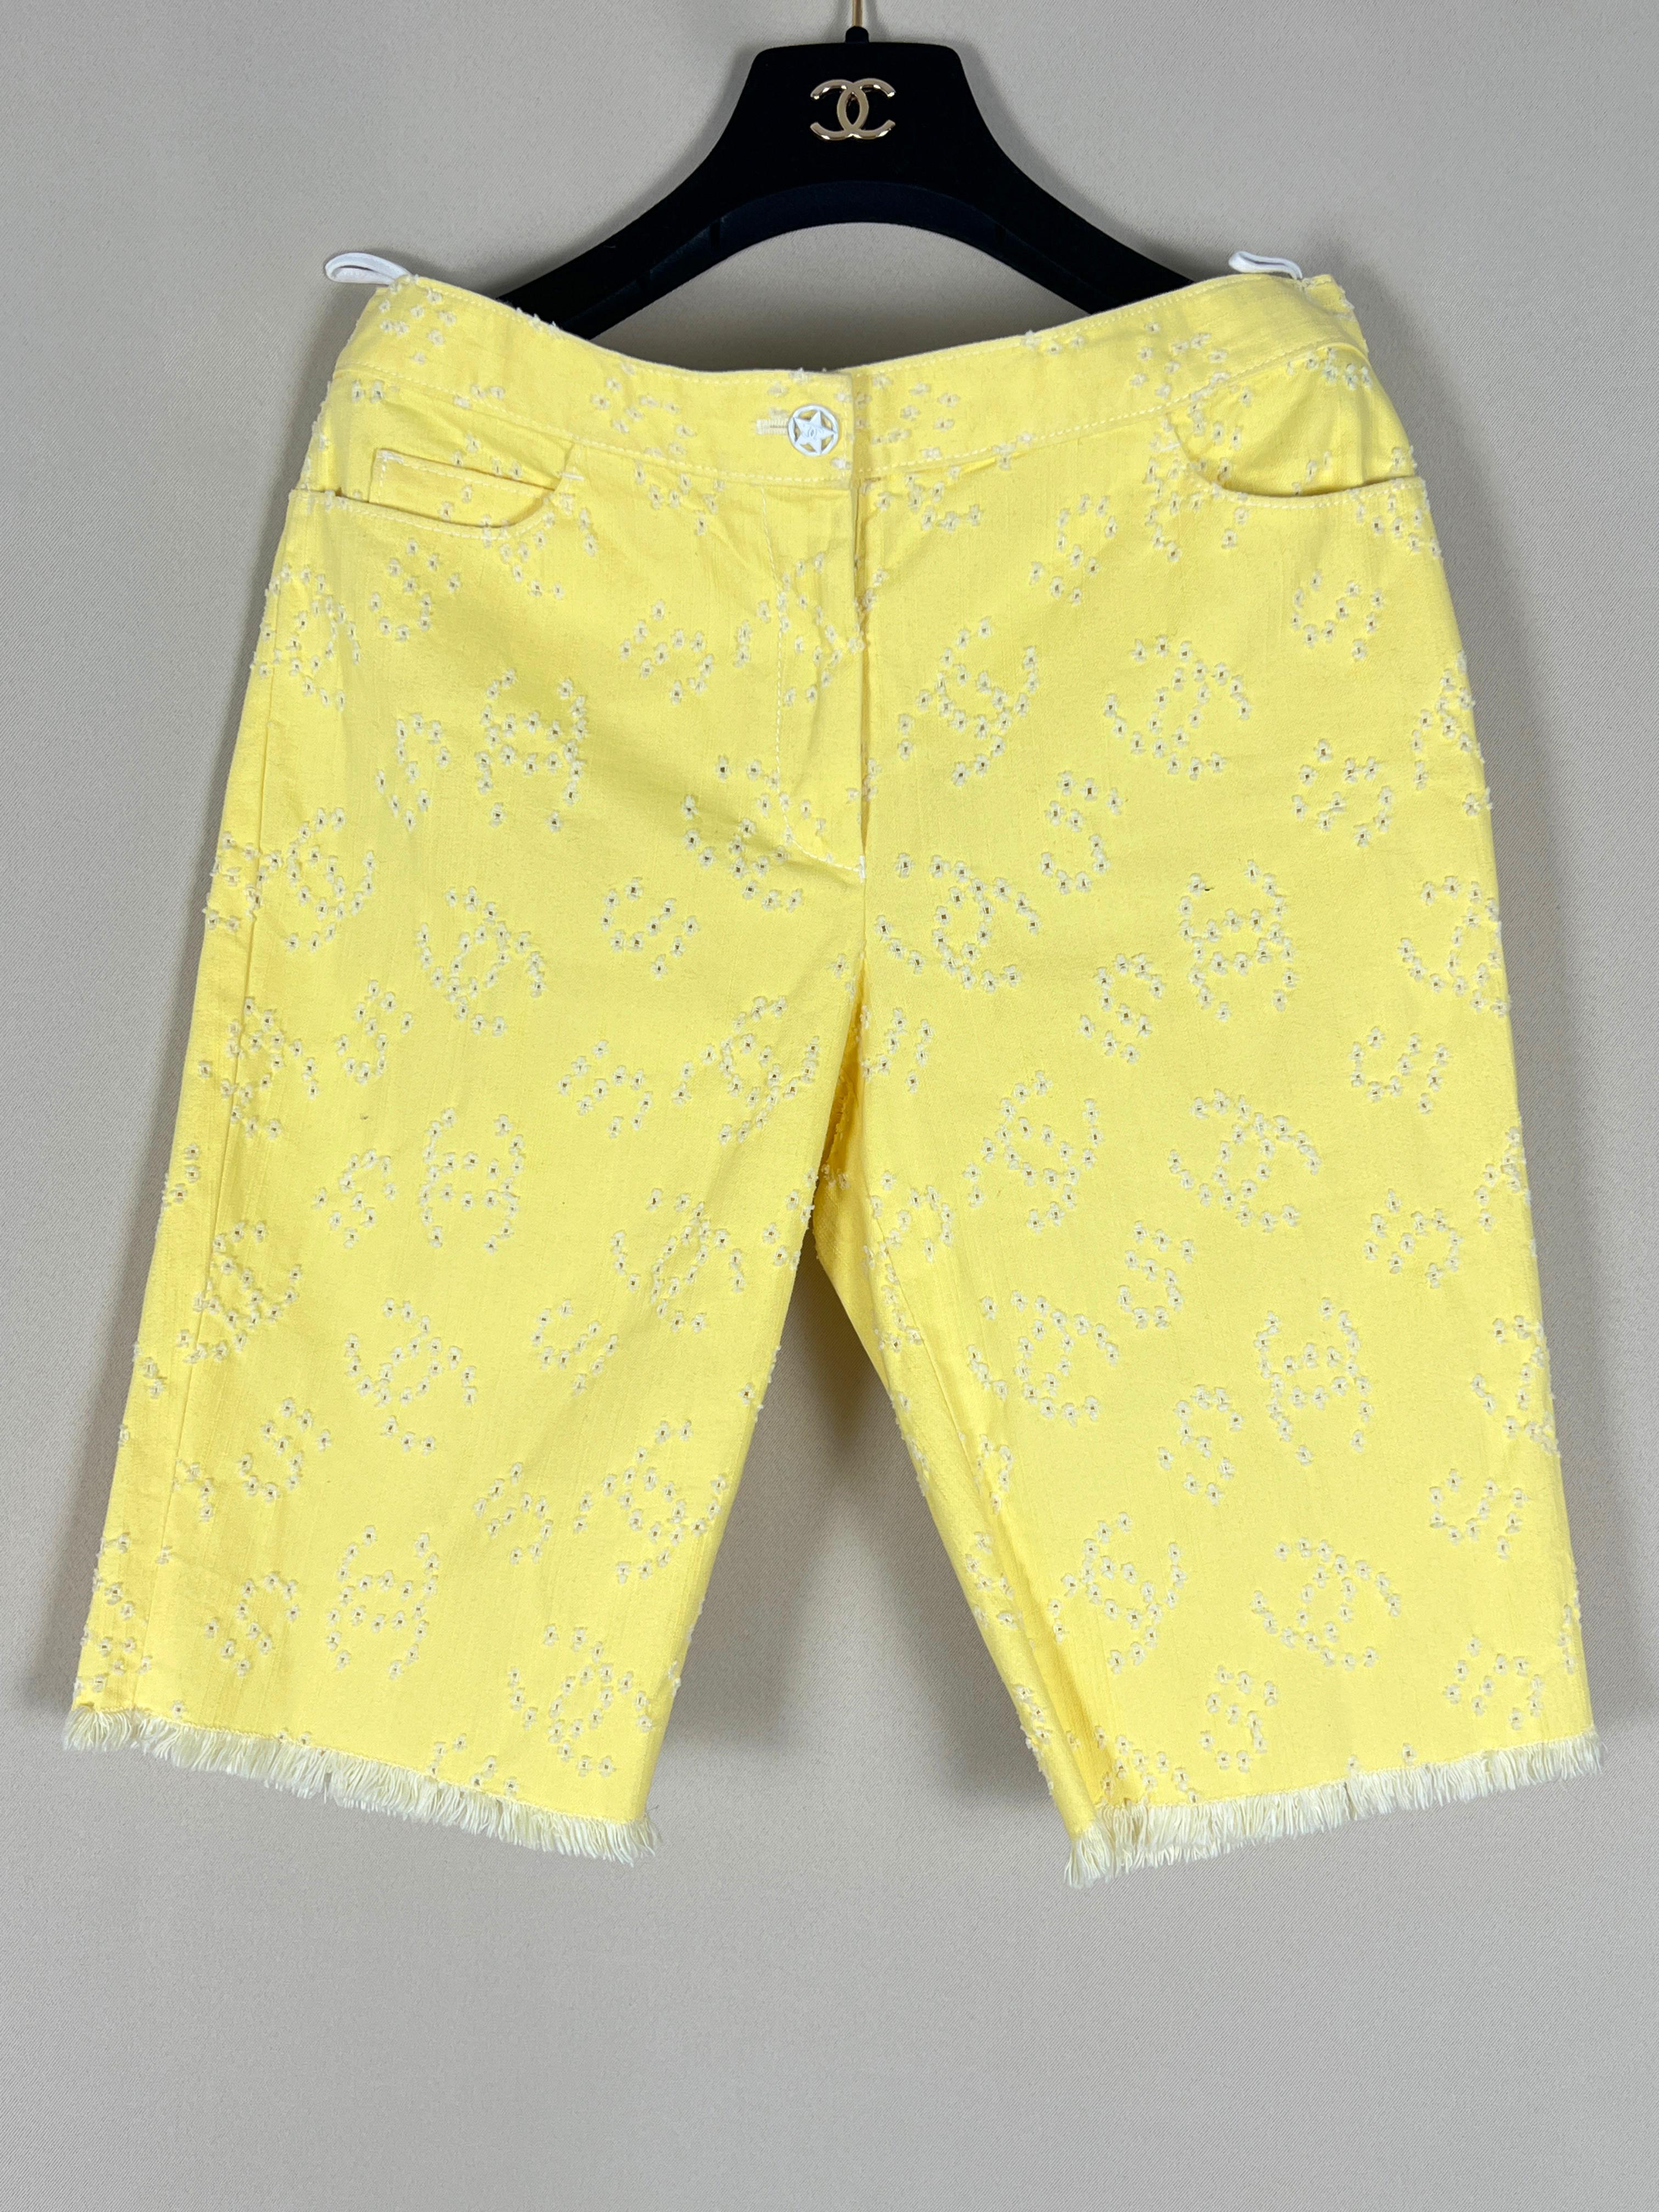 New Chanel yellow denim shorts with CC Logo & no 5 perforated symbols.
Size mark 36 FR. 